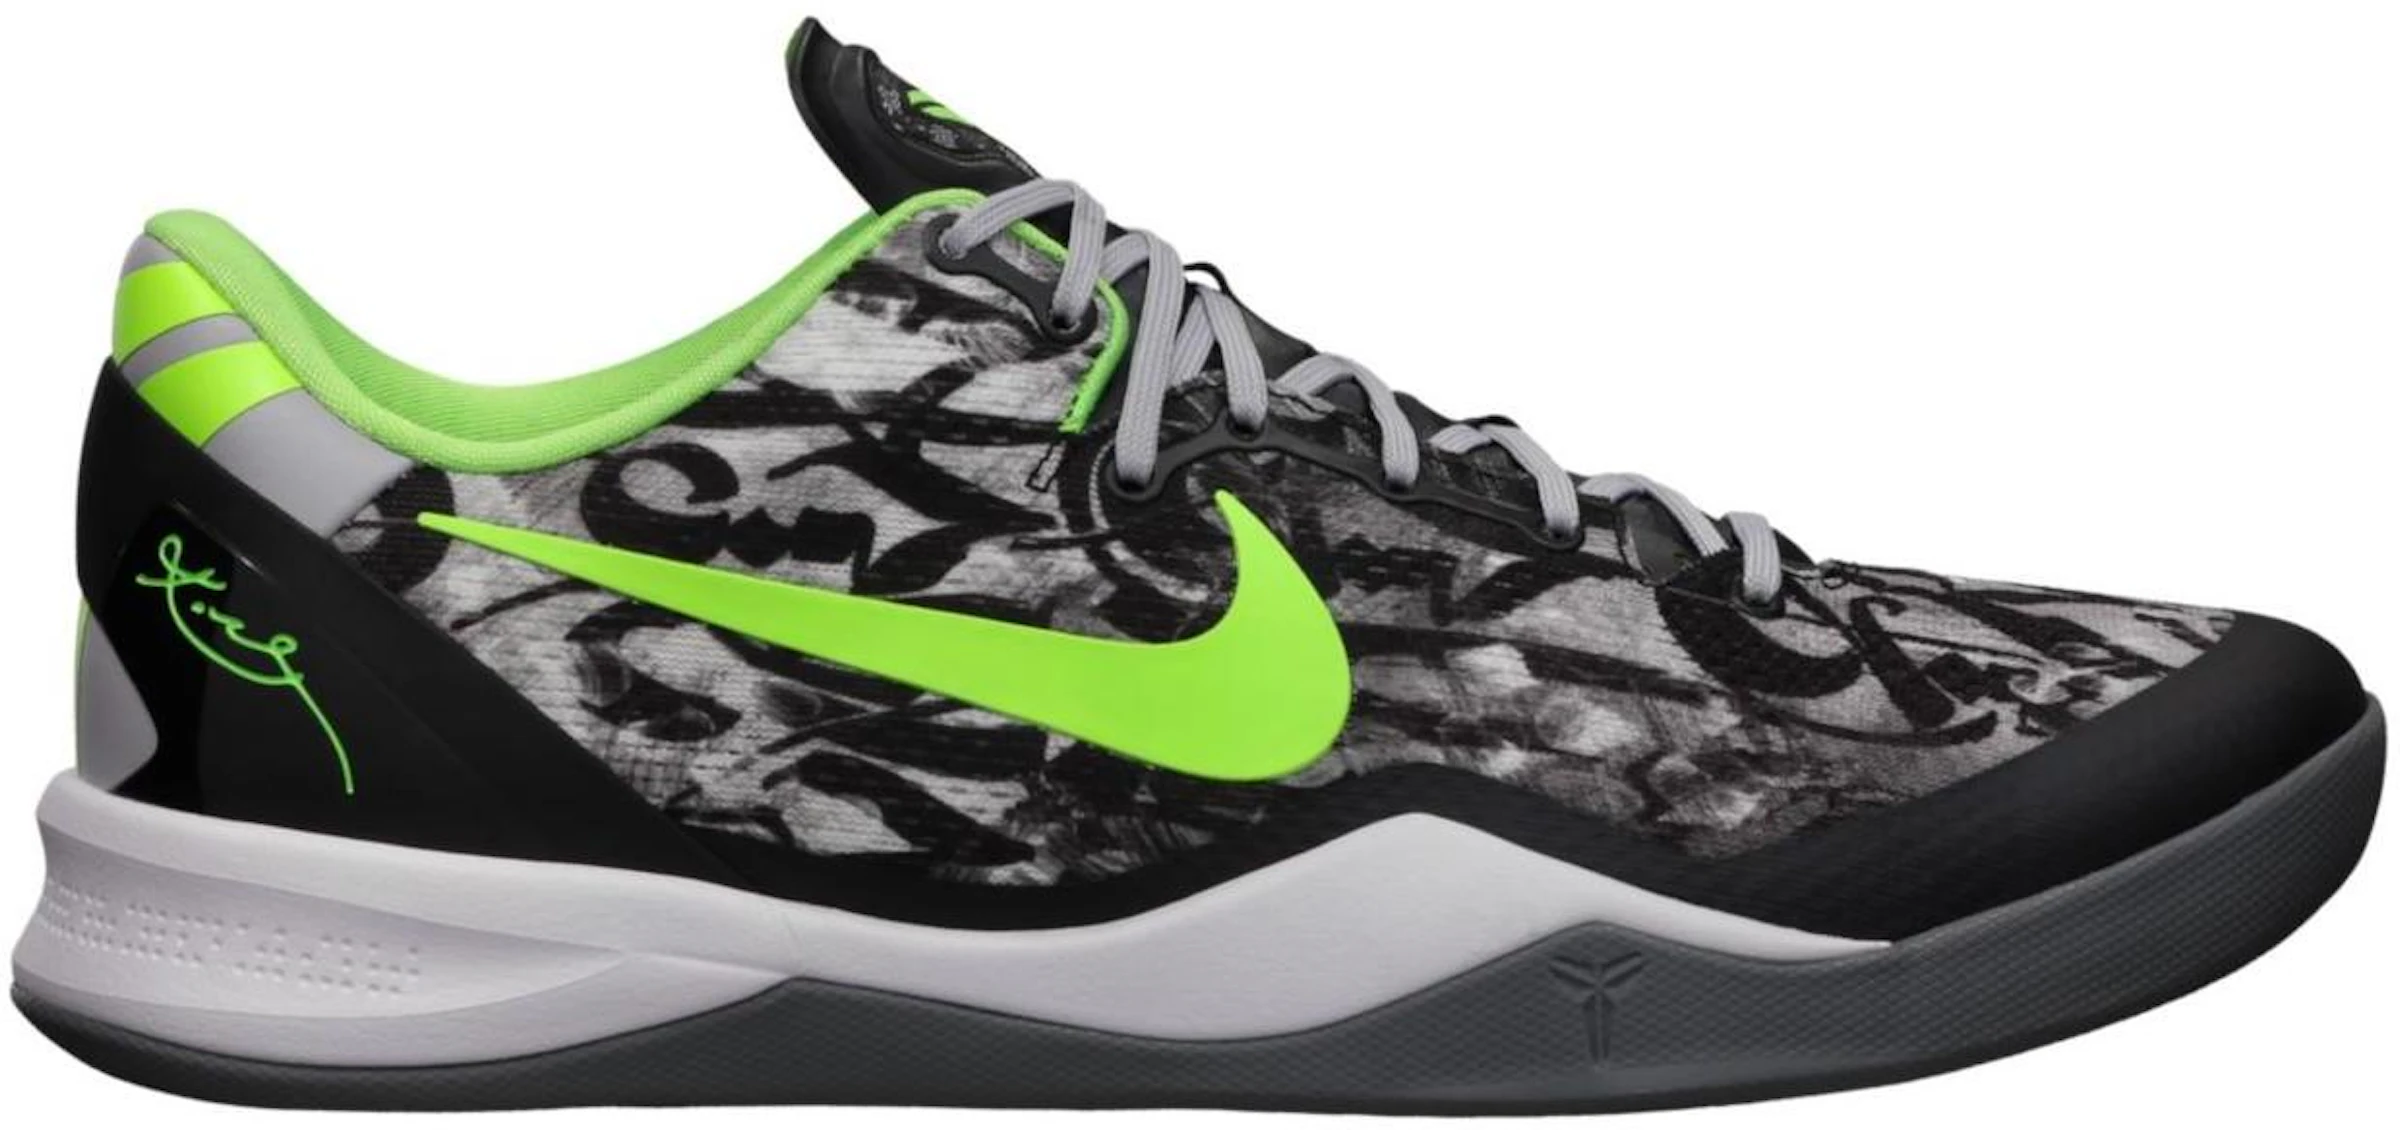 Compra Nike Kobe 8 Calzado sneakers nuevos - StockX